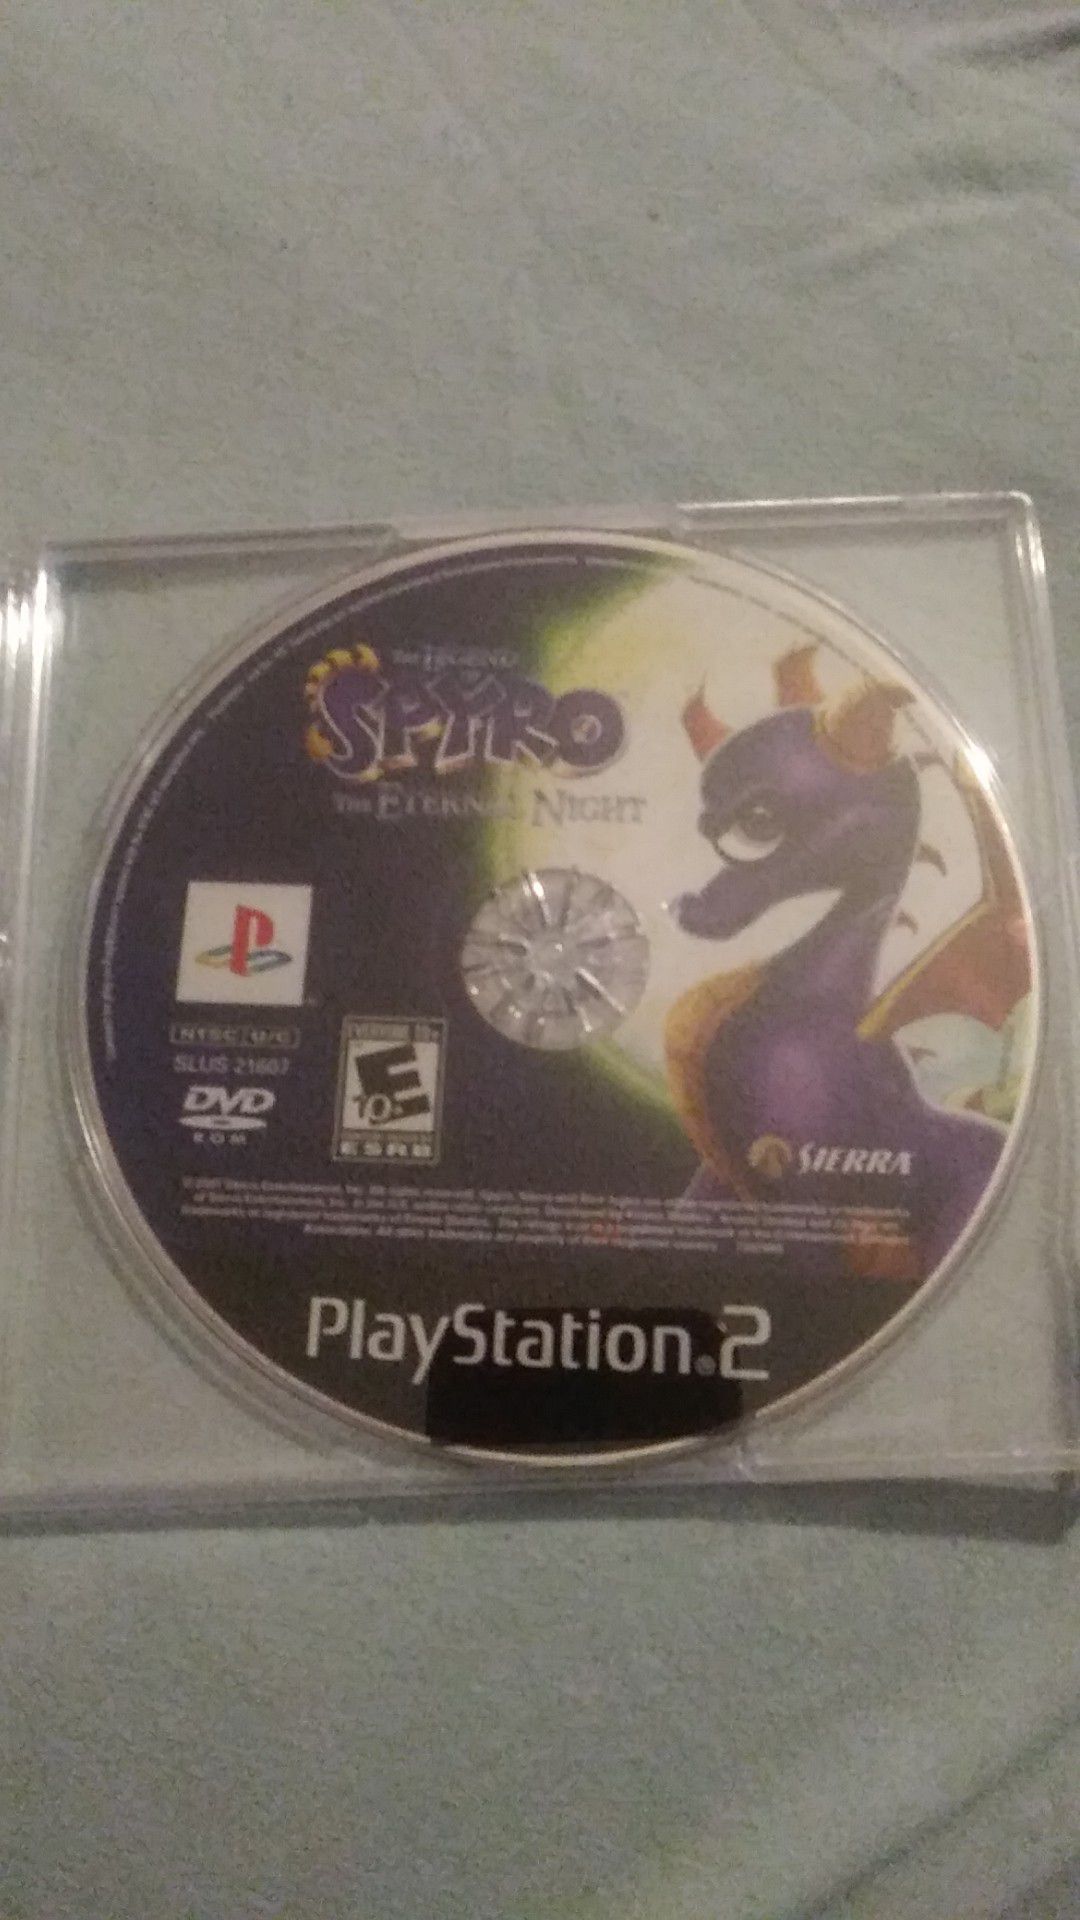 Spyro the eternal night